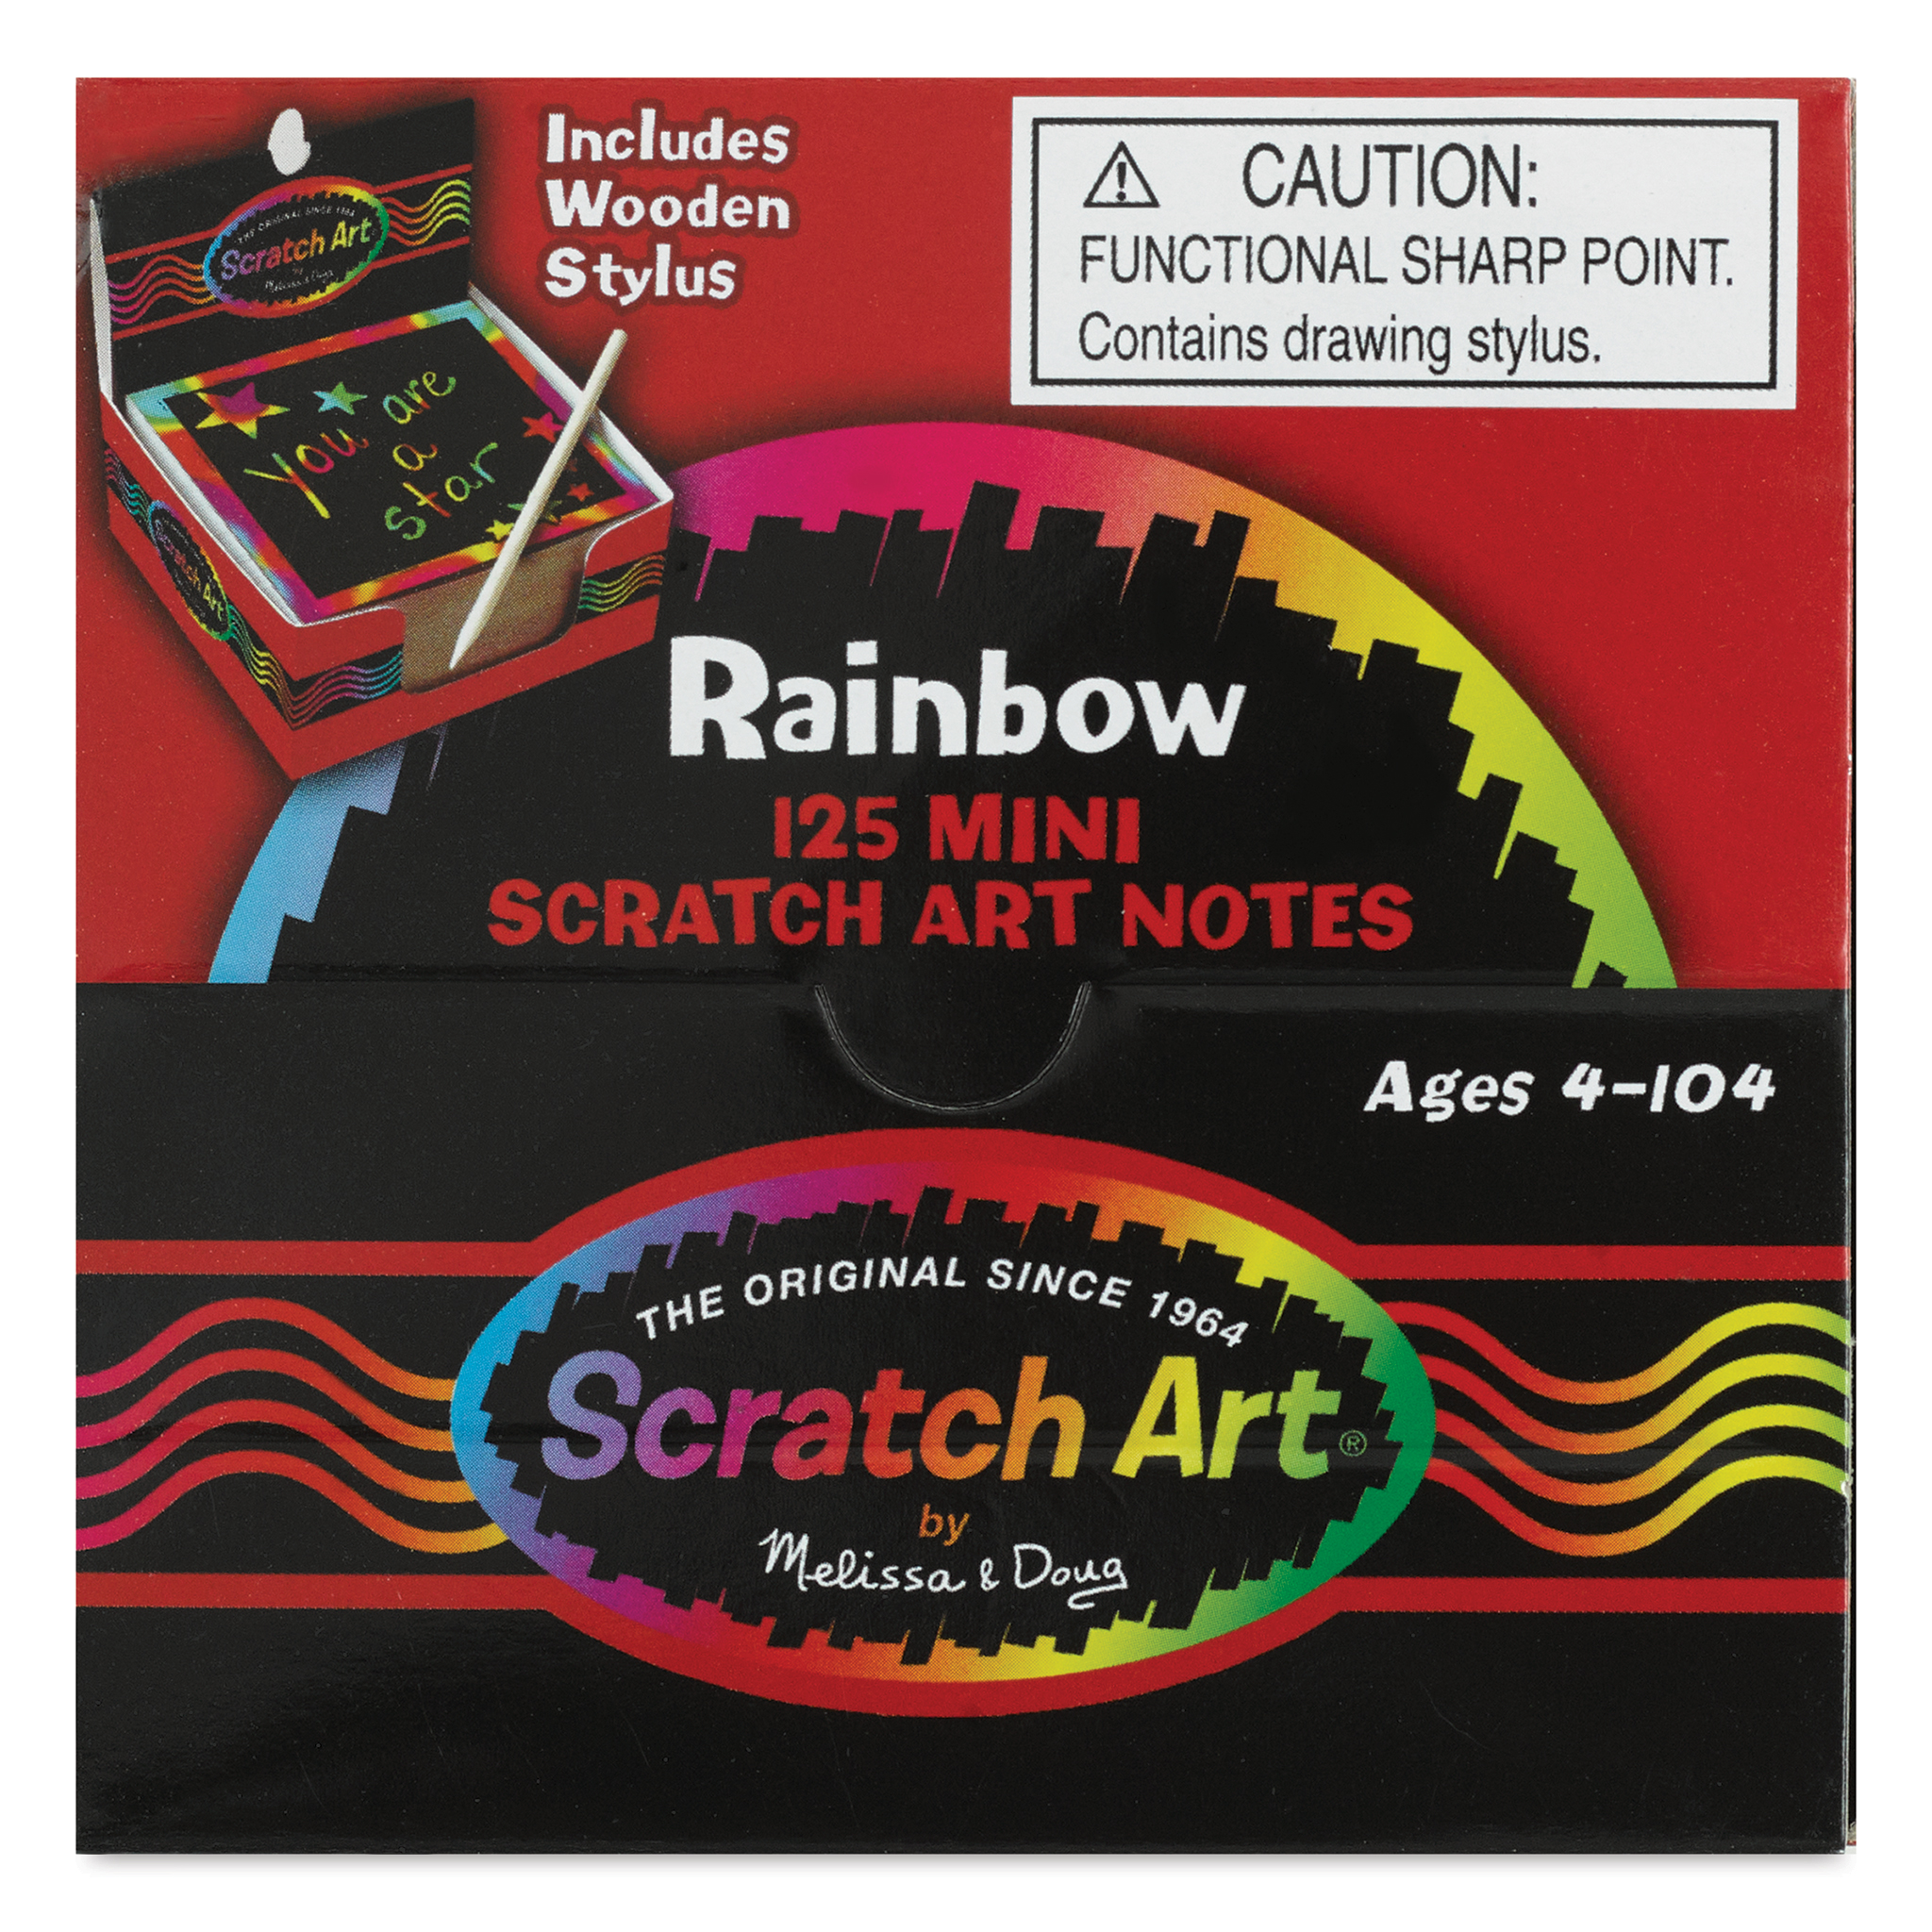 Melissa & Doug Scratch Art Rainbow Mini Notes (125 ct) With Wooden Stylus.  New